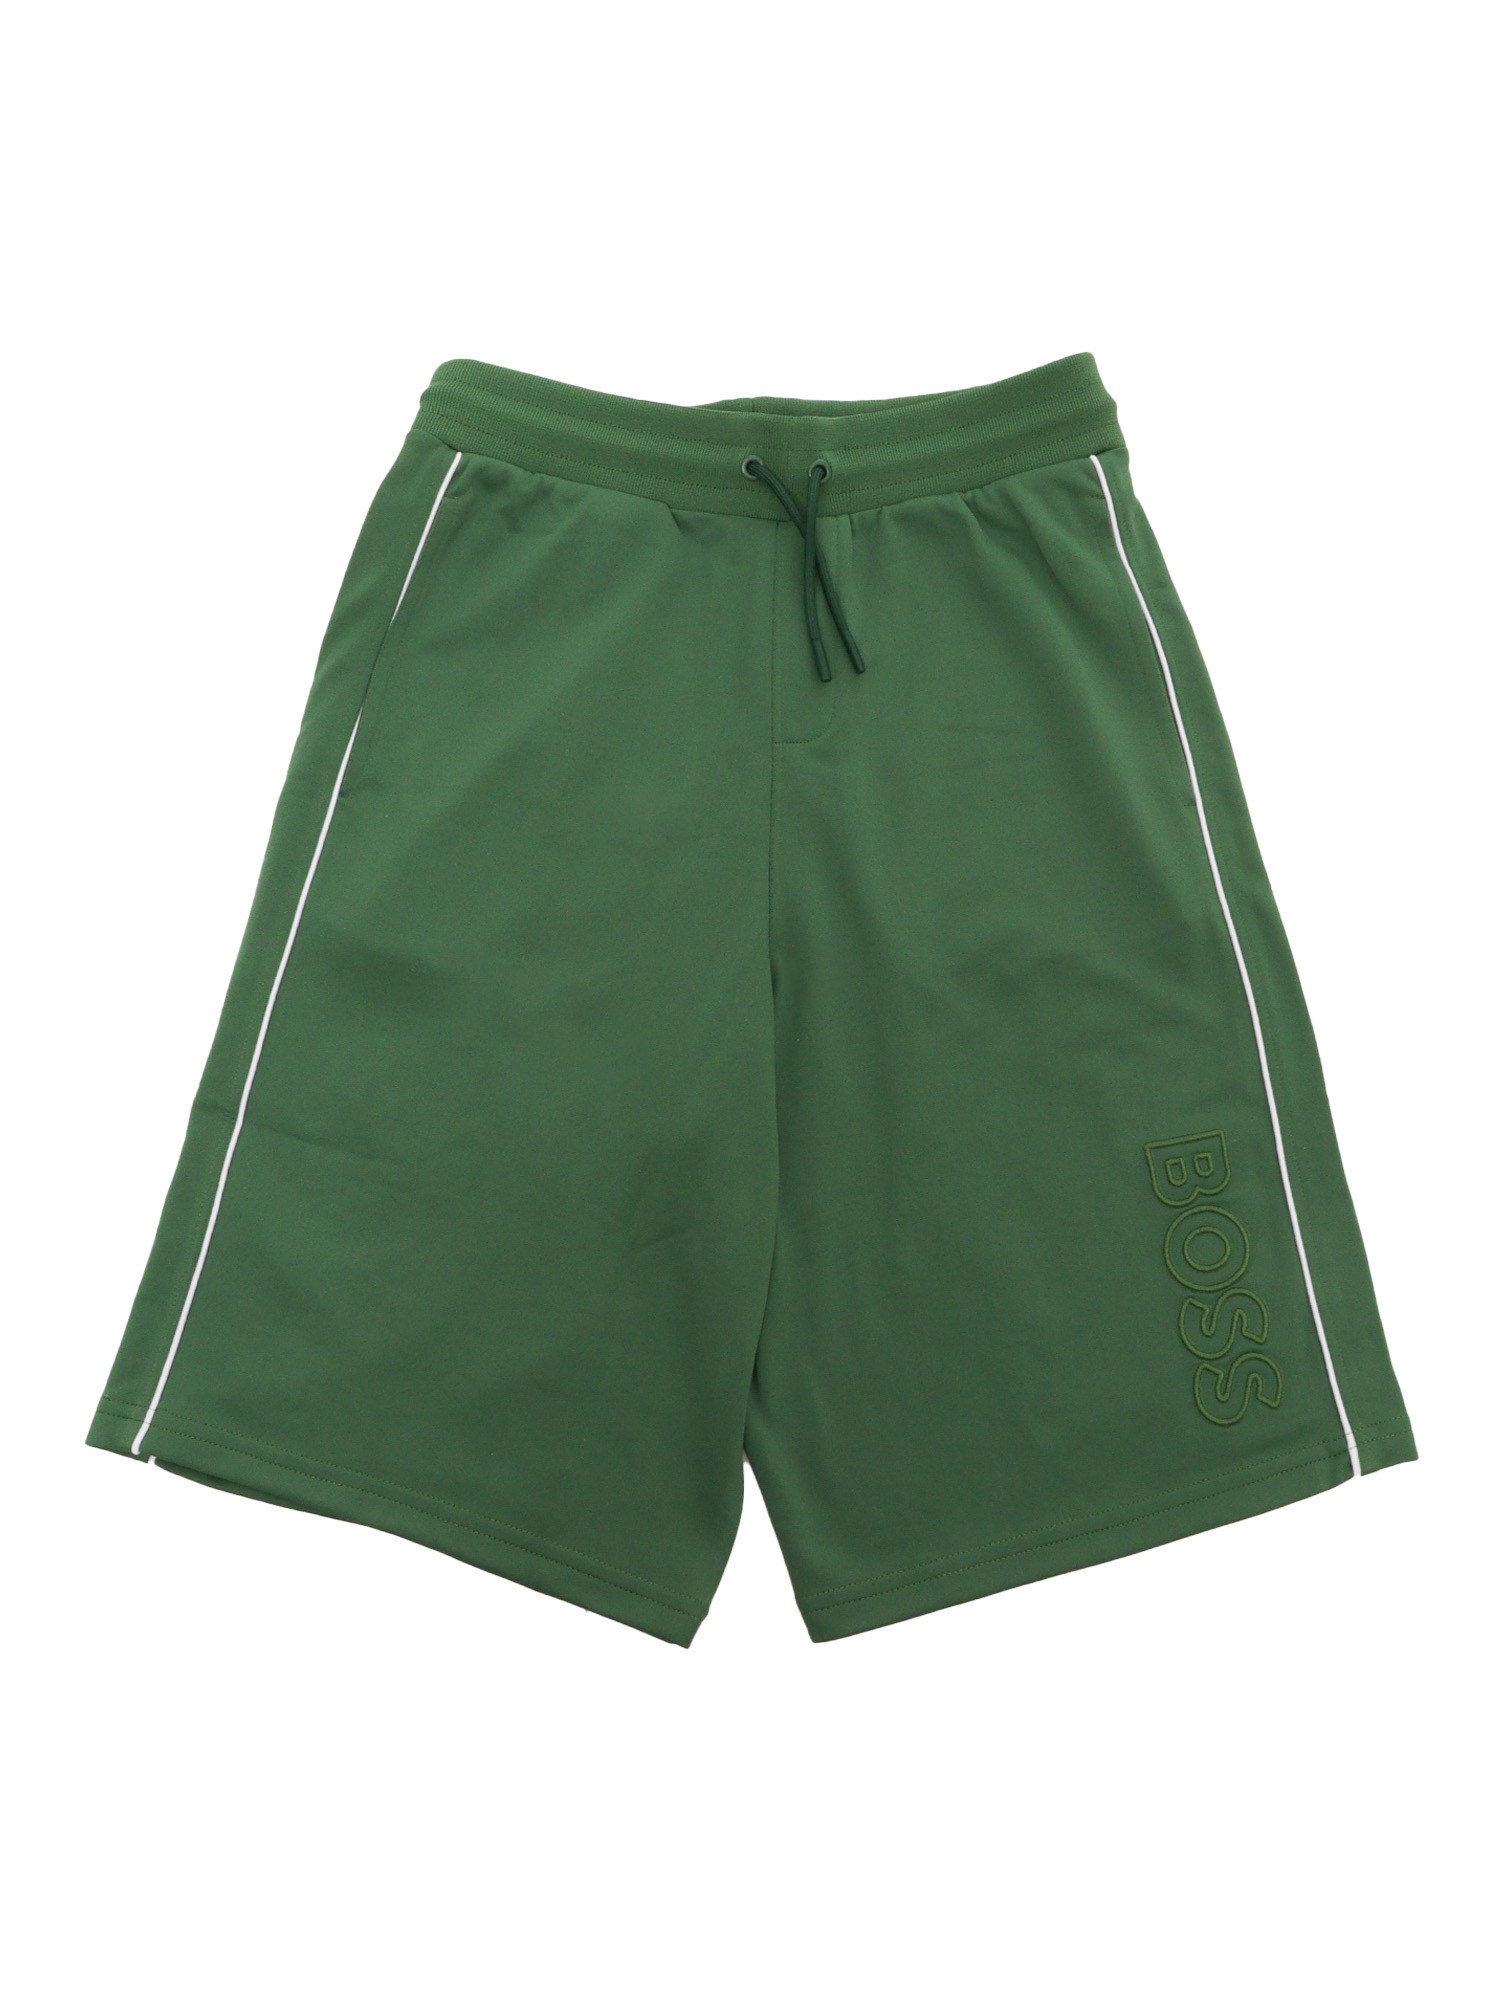 Hugo Boss Green Shorts With Logo